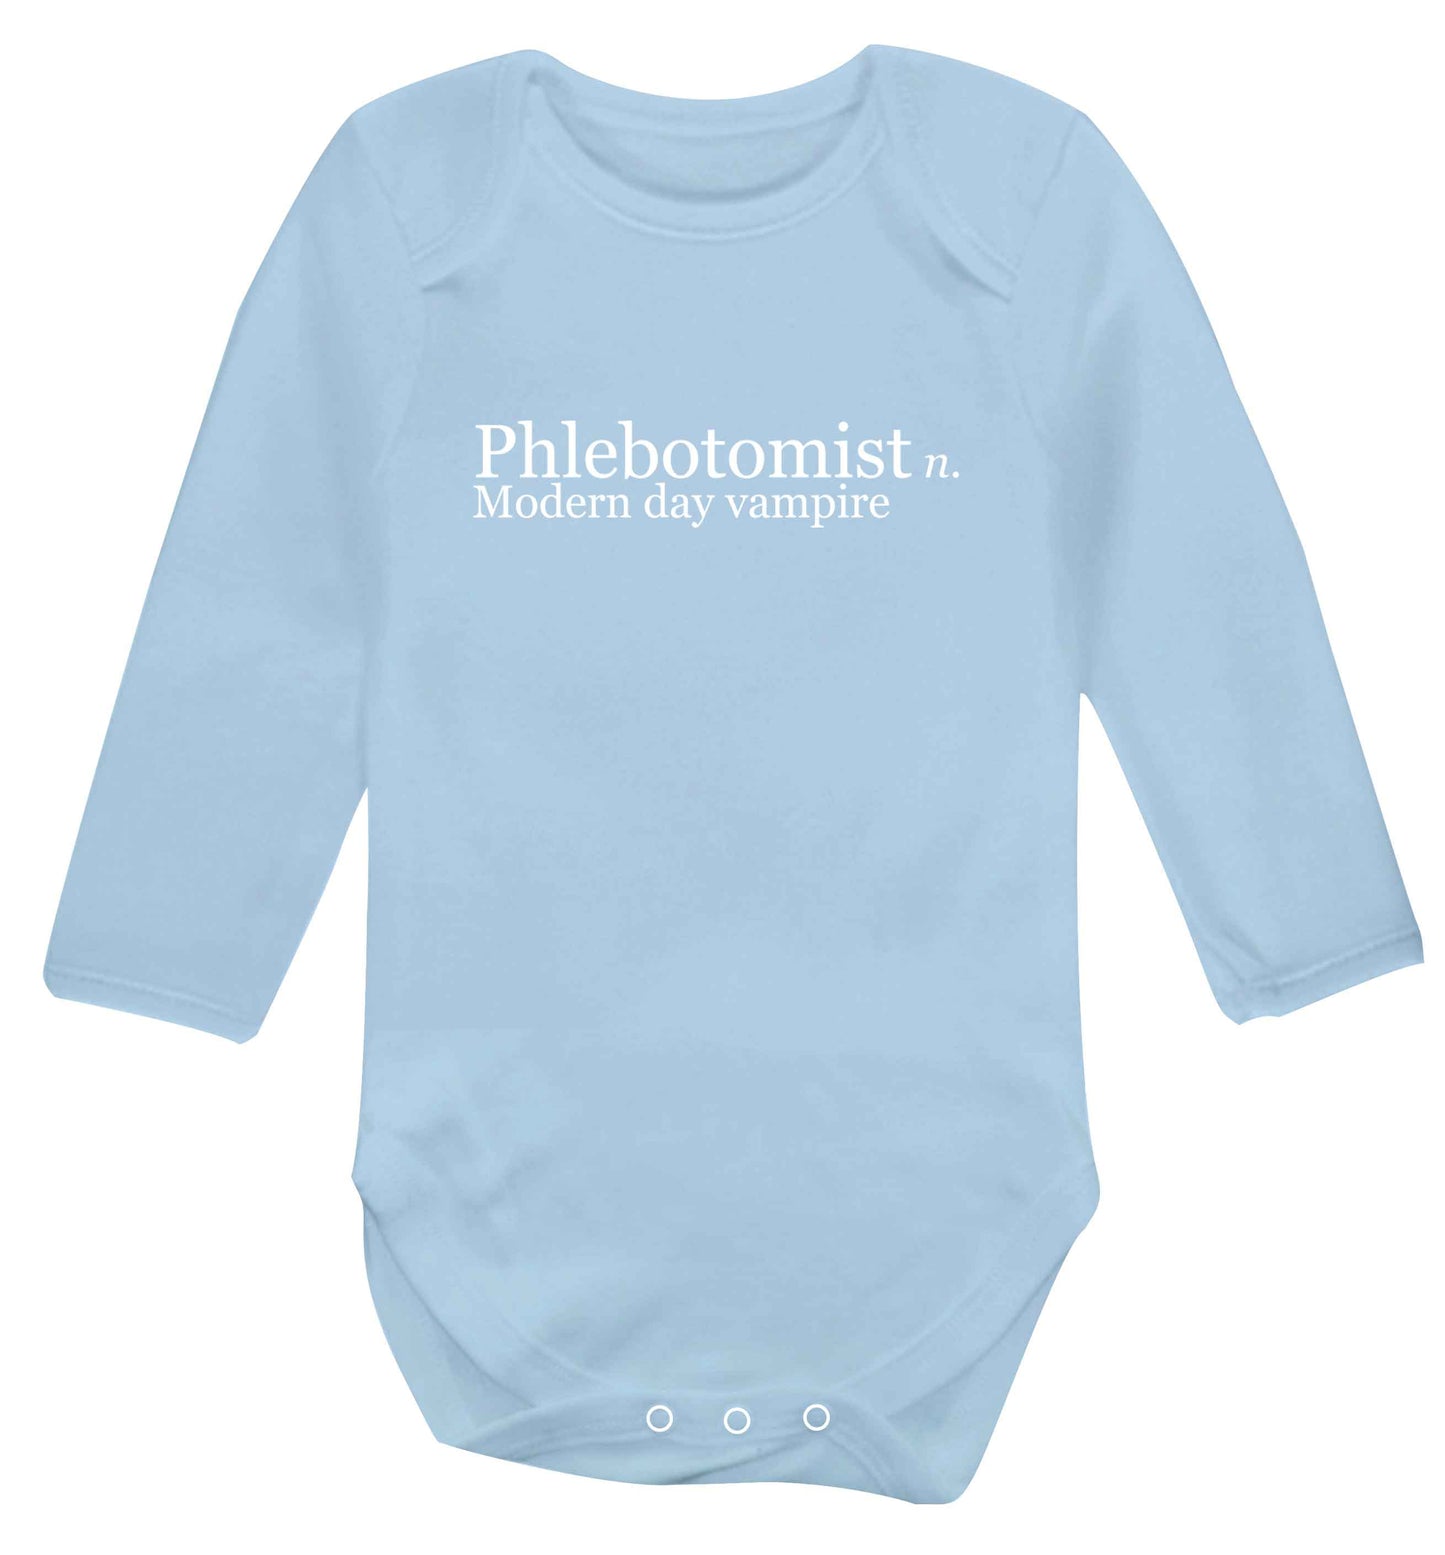 Phlebotomist - Modern day vampire baby vest long sleeved pale blue 6-12 months